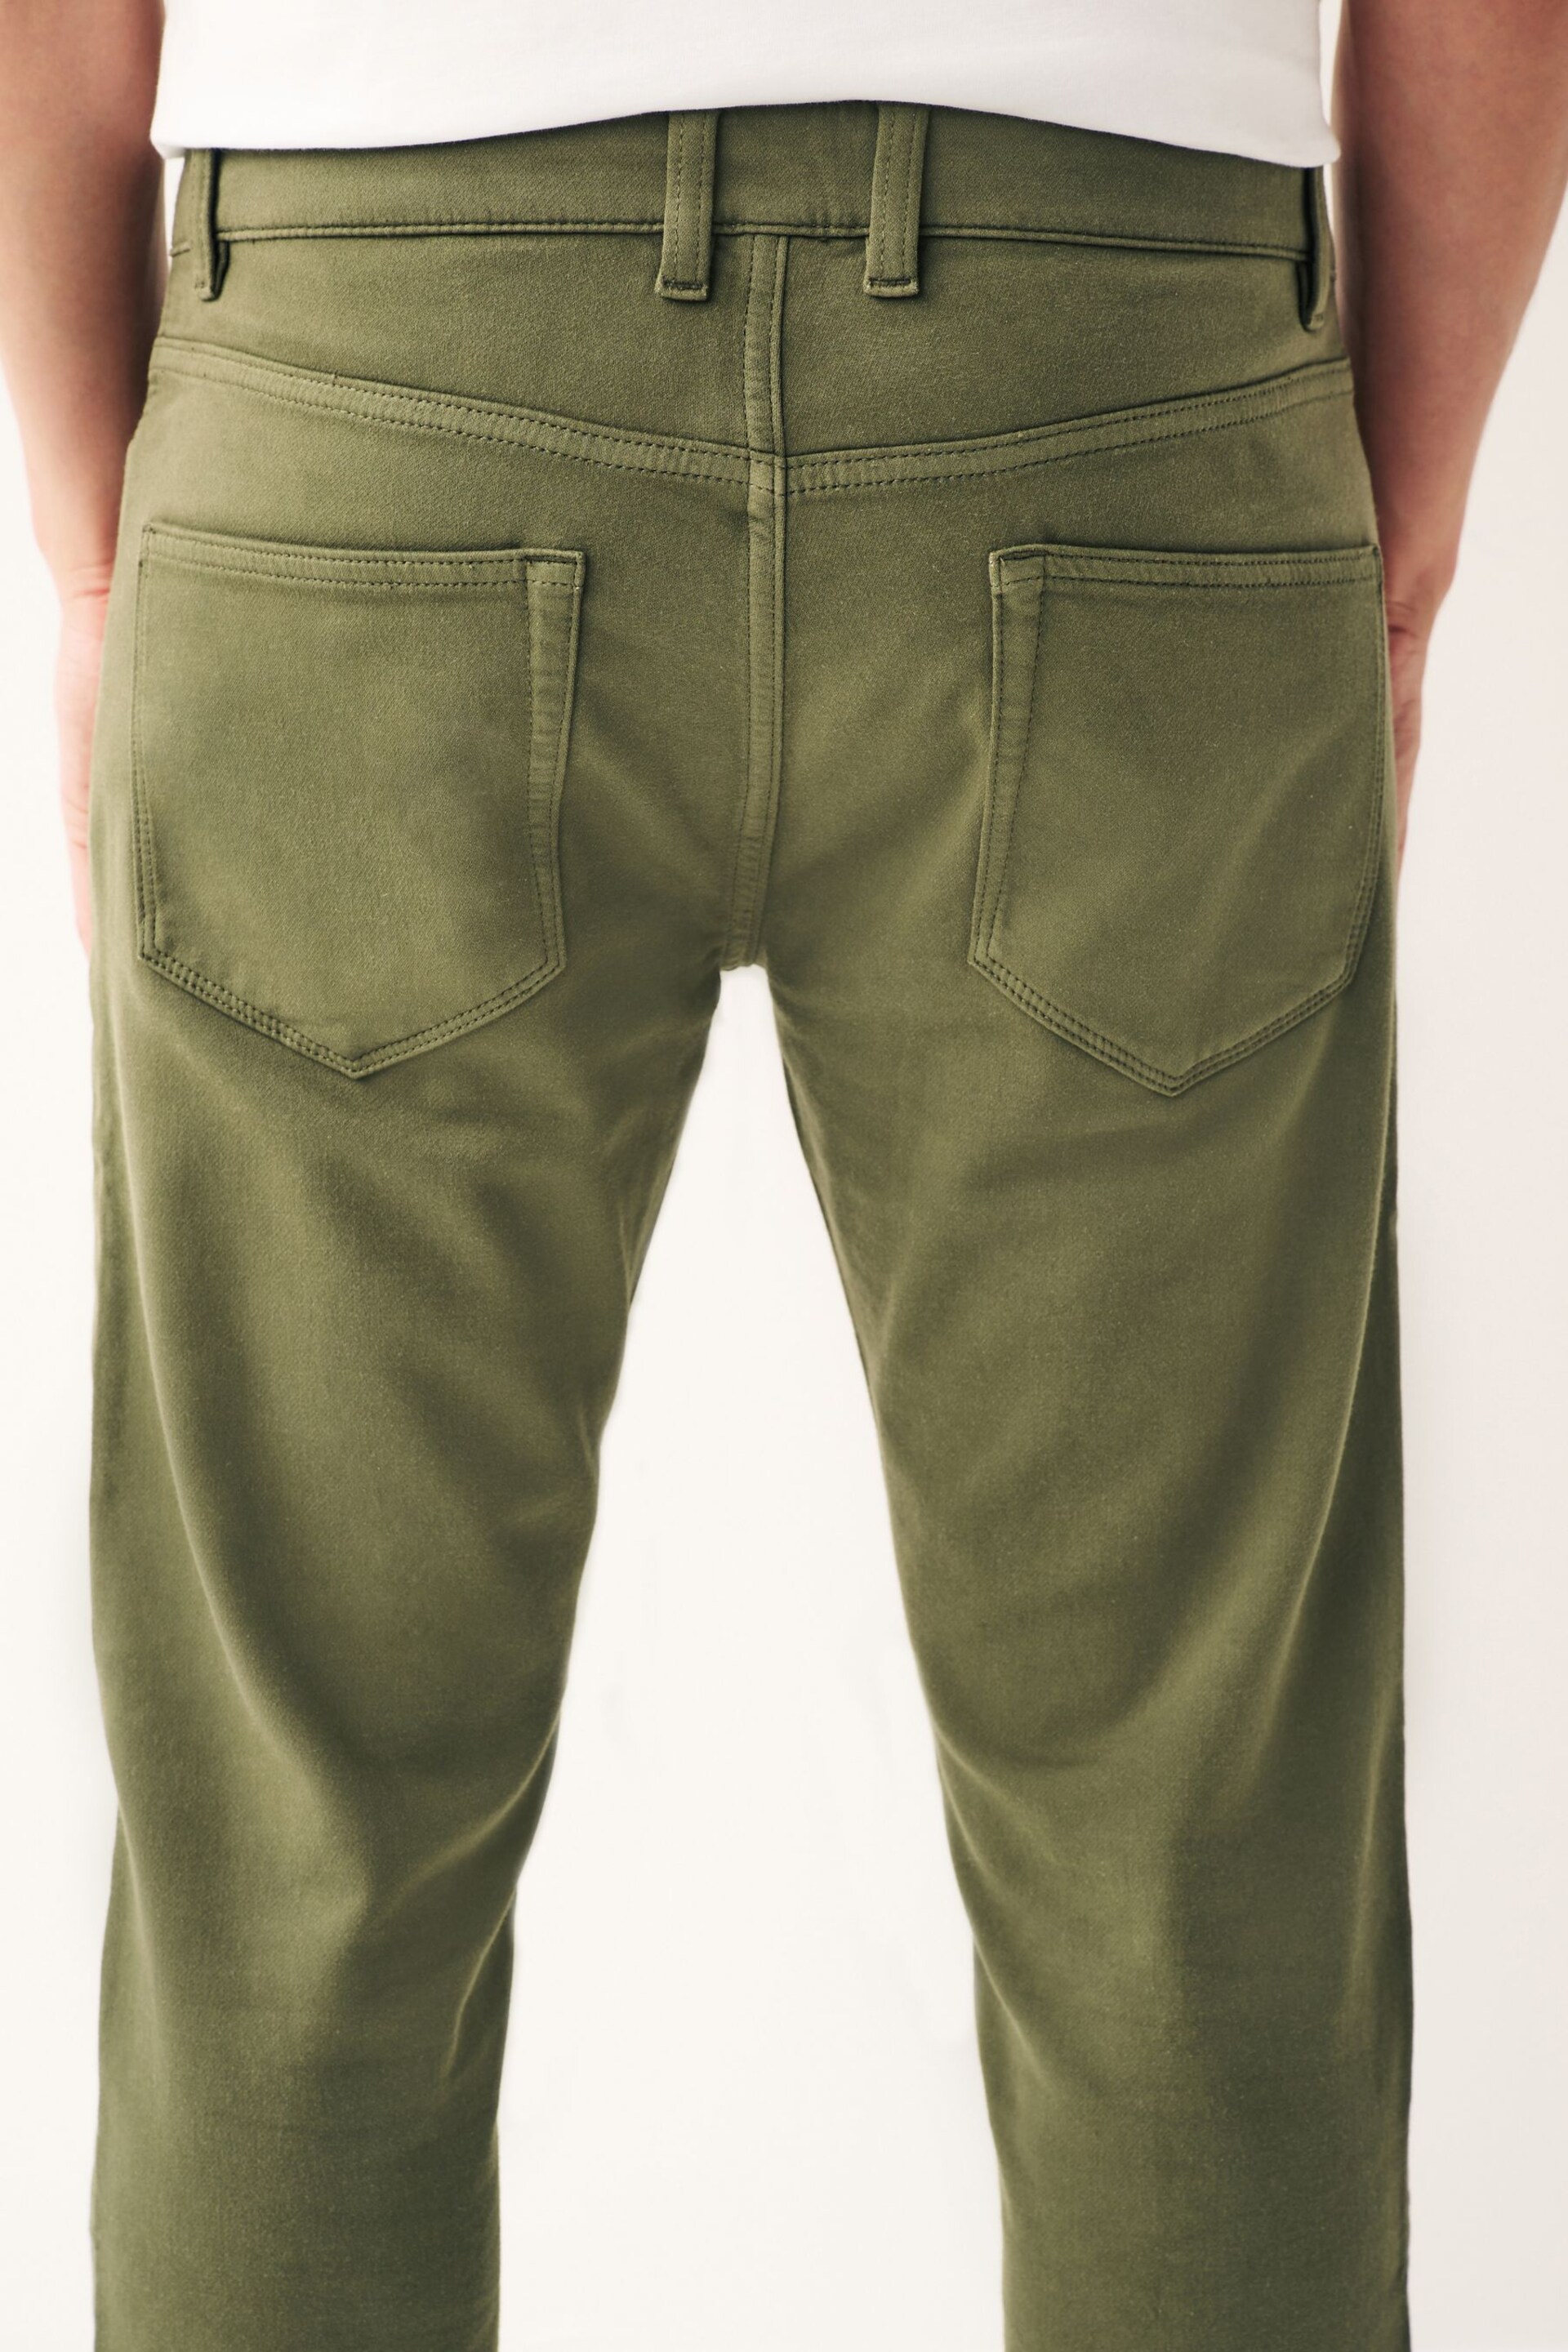 Green Sage Slim Fit Comfort Stretch Jeans - Image 5 of 6